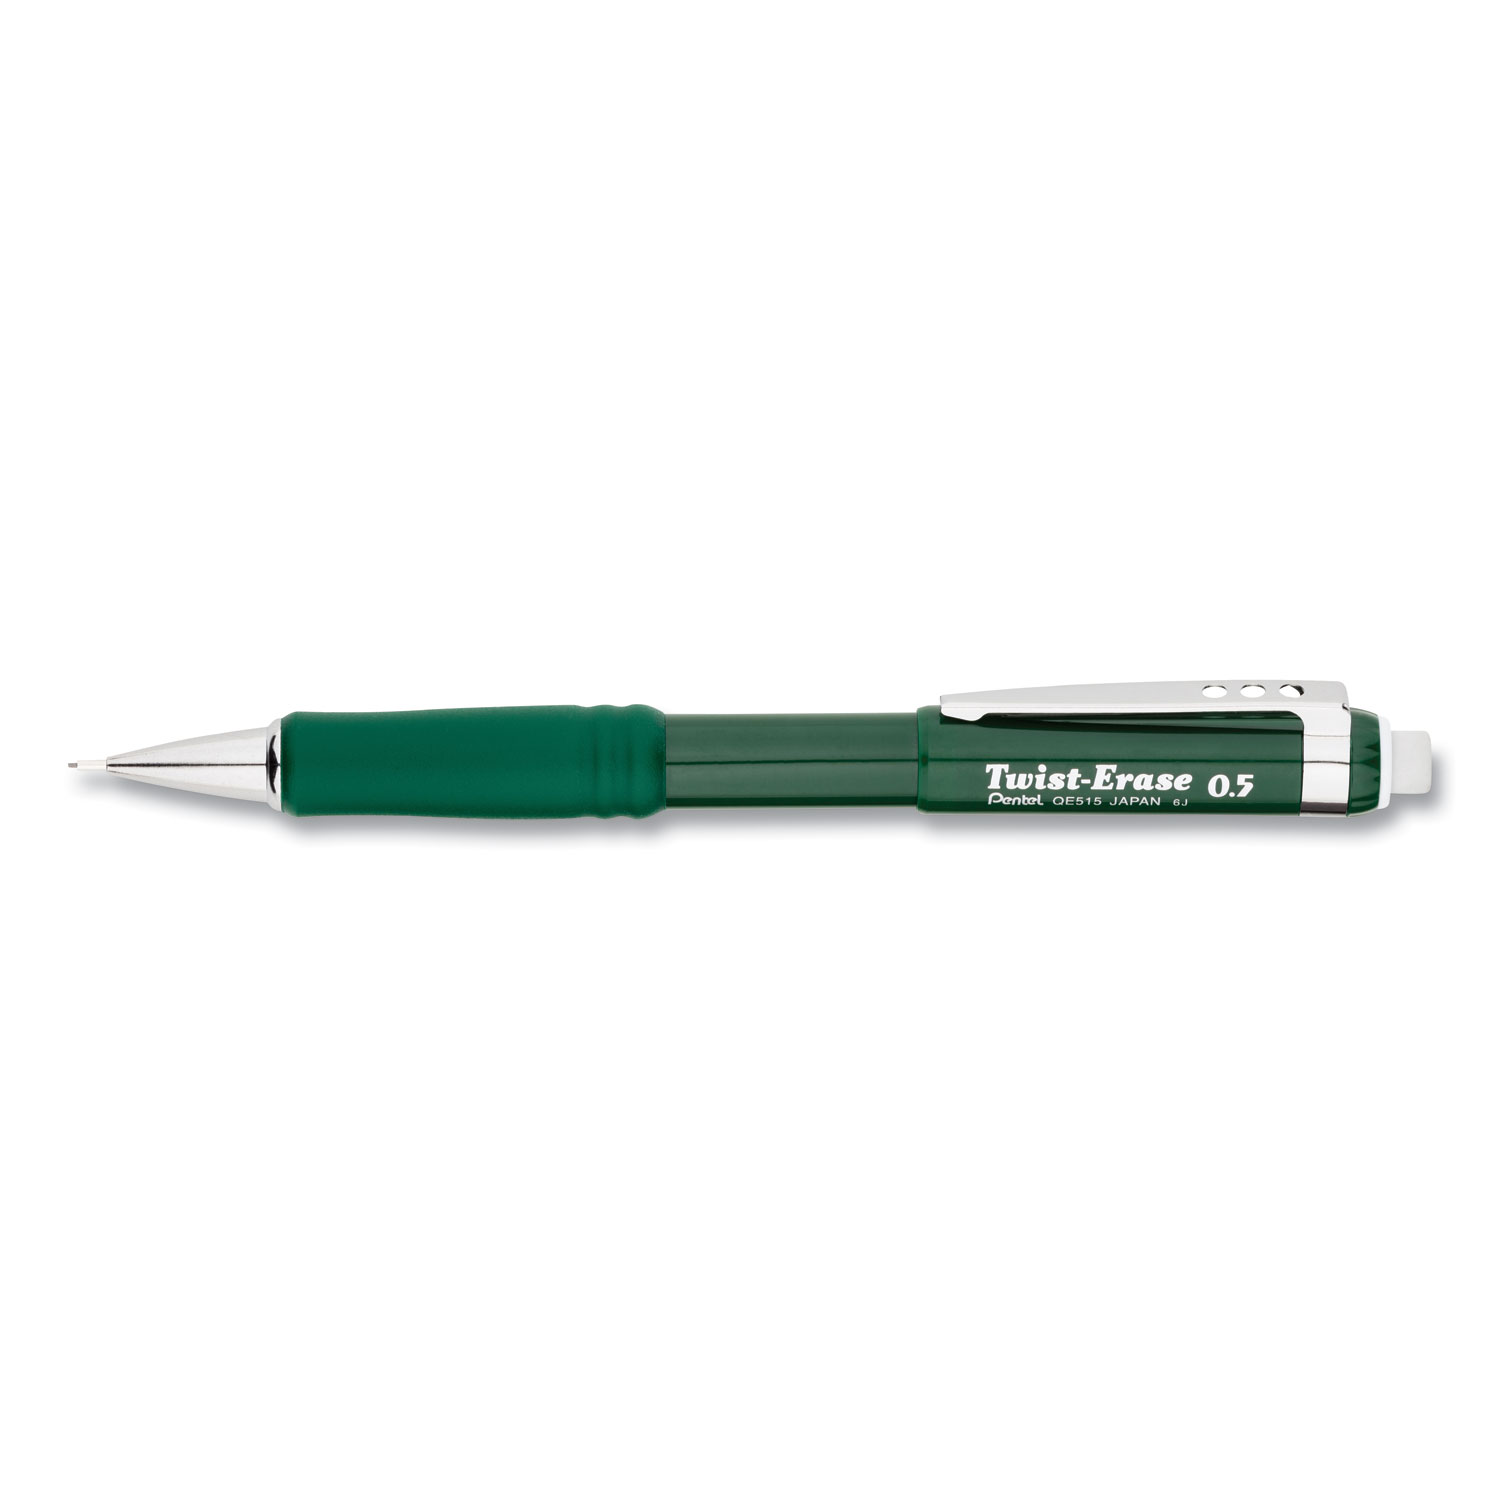  Pentel QE515D Twist-Erase III Mechanical Pencil, 0.5 mm, HB (#2.5), Black Lead, Green Barrel (PENQE515D) 